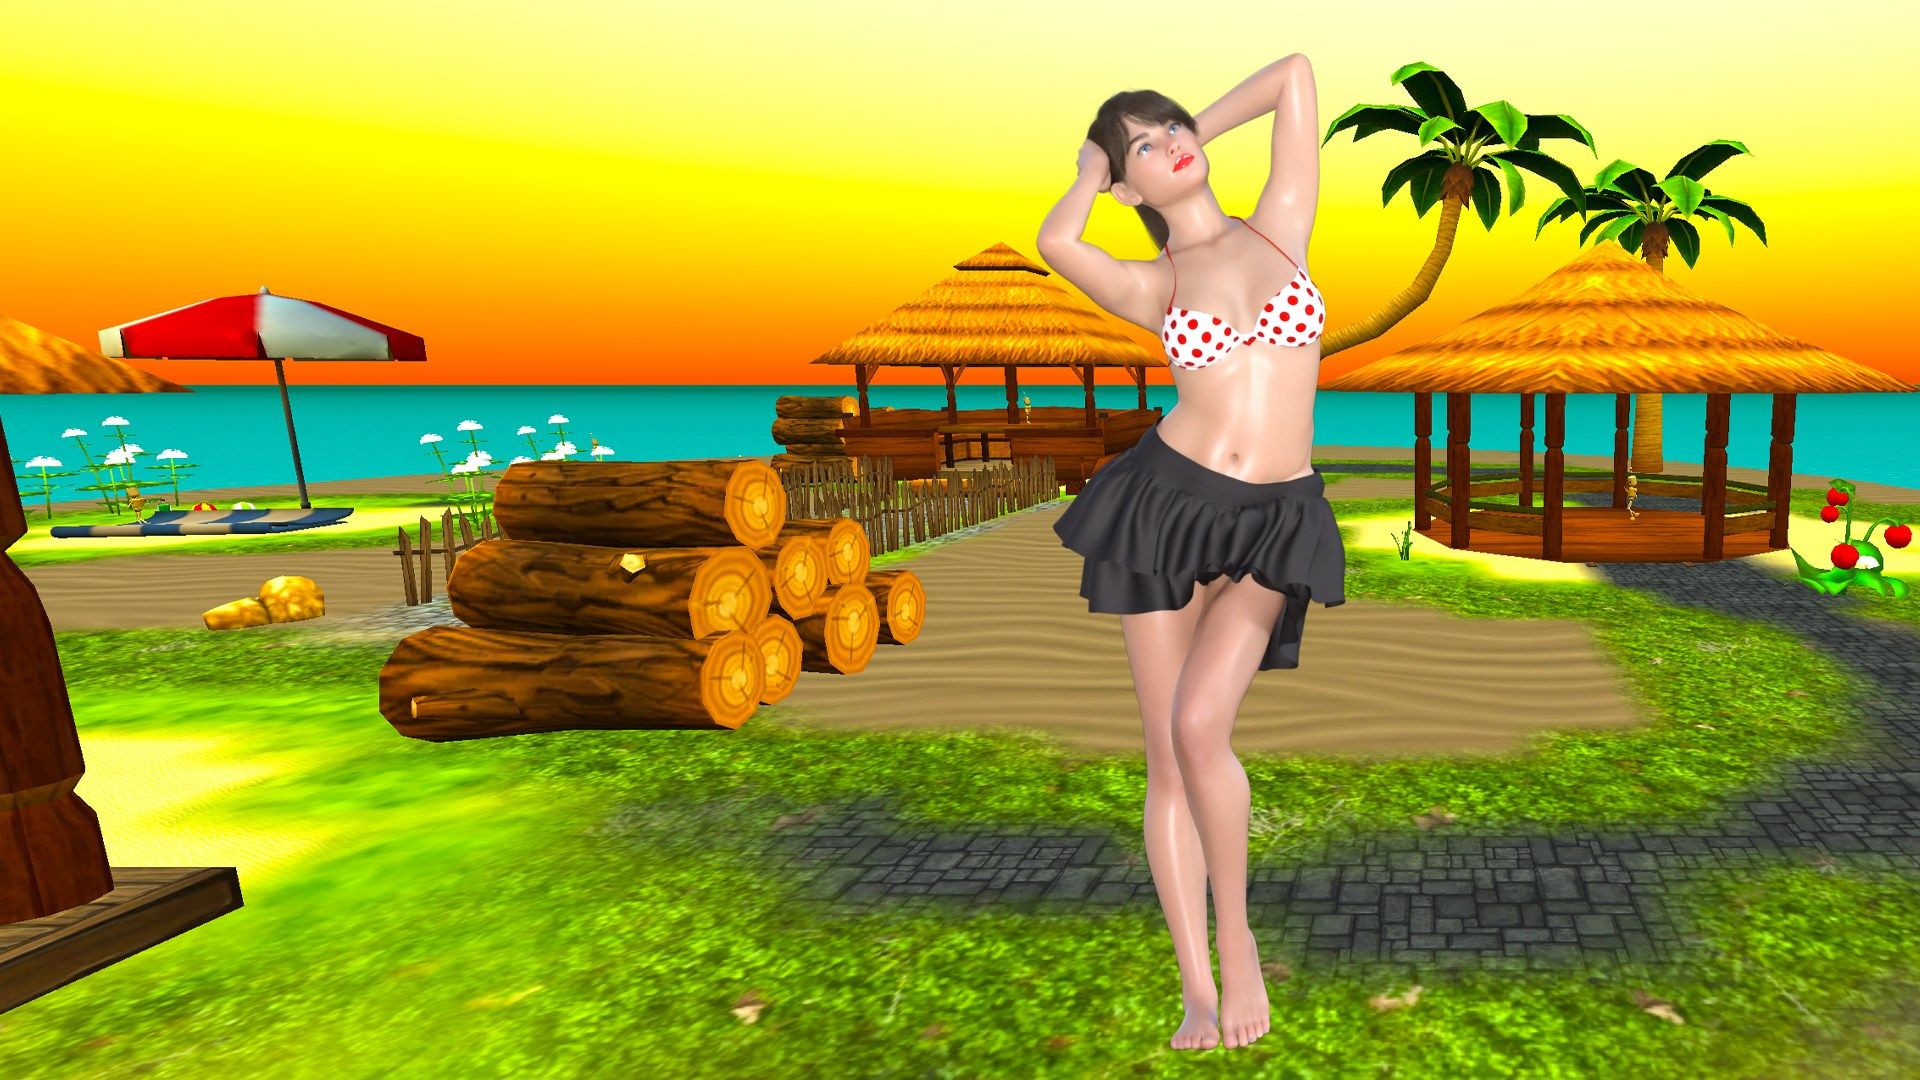 Dazzling Virtual Beach Dancer [HD+]